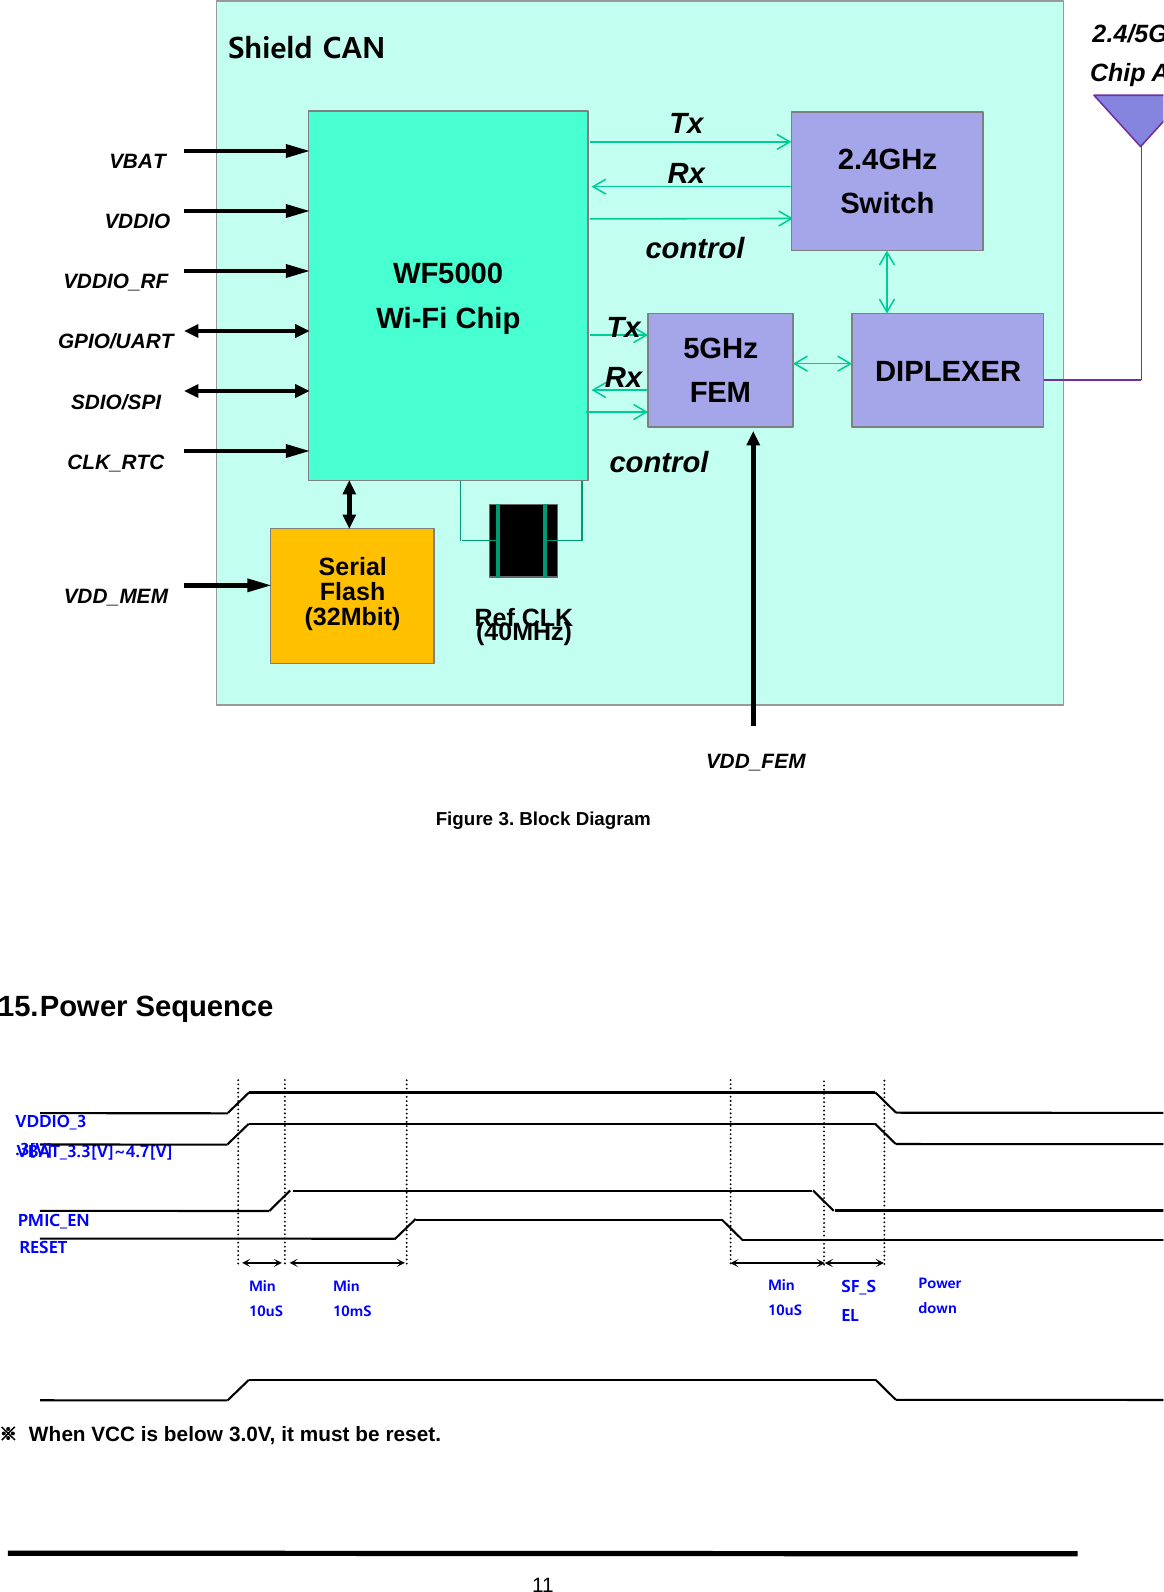  11      Figure 3. Block Diagram     15. Power Sequence   ※ When VCC is below 3.0V, it must be reset.       2.4/5GChip AVDDIO_RF GPIO/UART SDIO/SPI CLK_RTC VDD_MEM VBAT Rx control WF5000 Wi-Fi Chip 2.4GHz Switch Ref CLK (40MHz) Serial Flash (32Mbit) control Shield CAN VDDIO Tx Rx Tx 5GHz FEM DIPLEXER VDD_FEM VBAT_3.3[V]~4.7[V] PMIC_EN RESET Min 10uS Min 10mS Power down   VDDIO_3.3[V] SF_SEL Min 10uS 